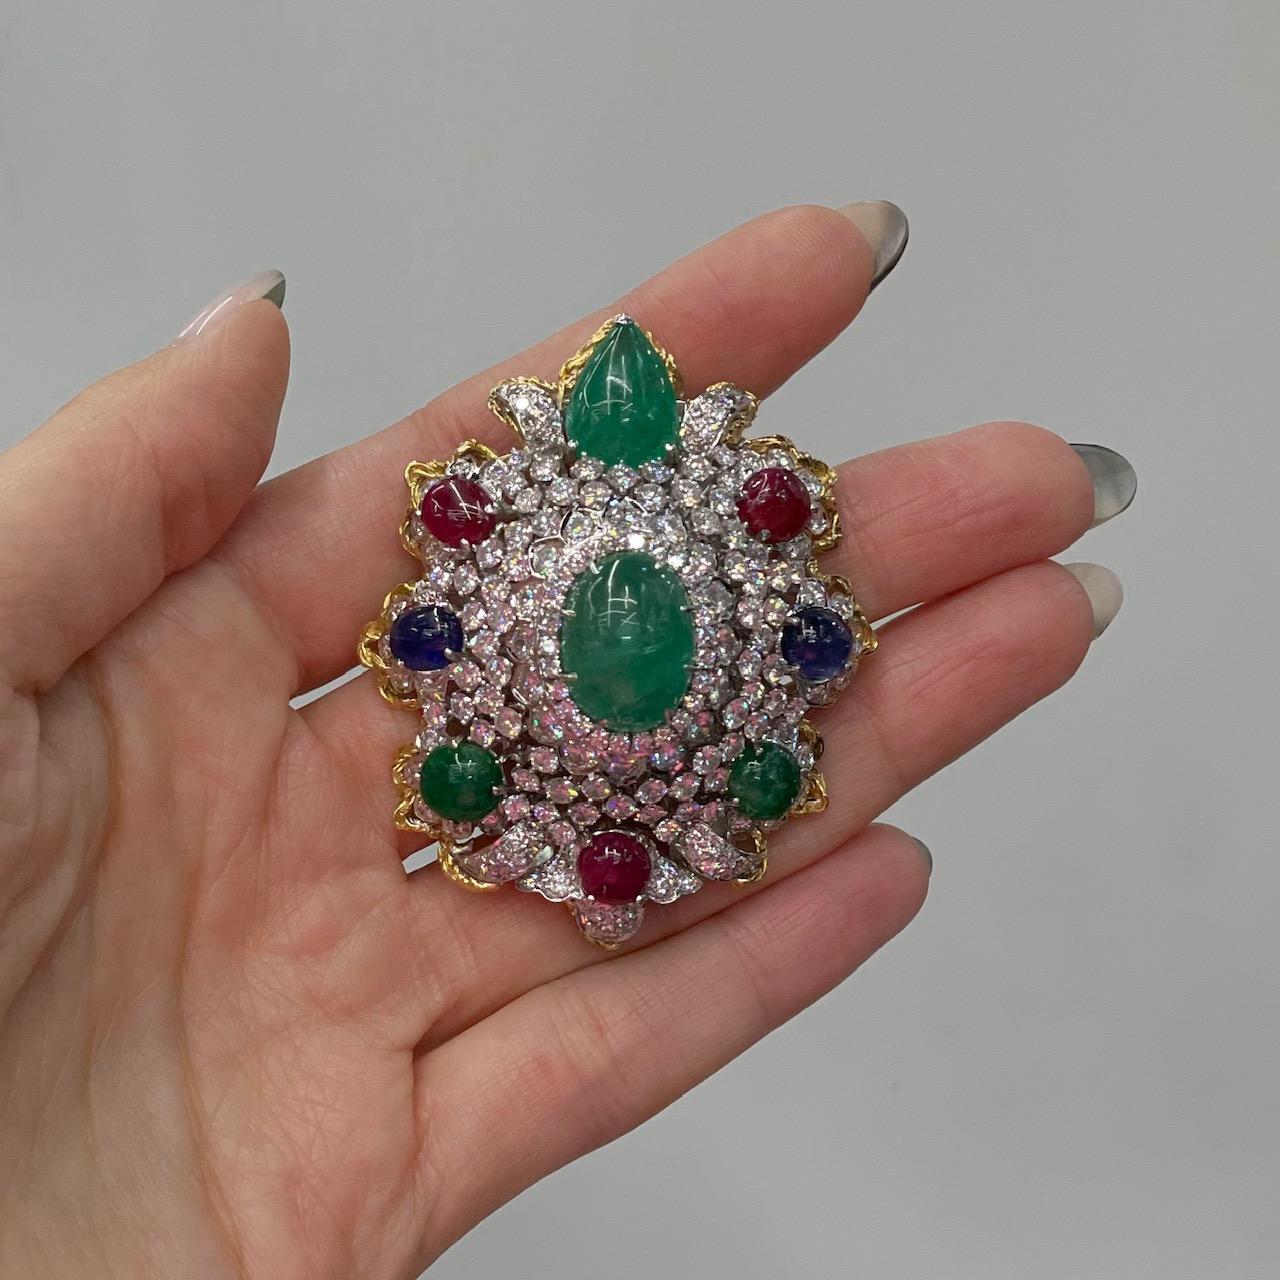 Women's or Men's Diamond And Gemstones Heraldic Brooch from 1970's For Sale